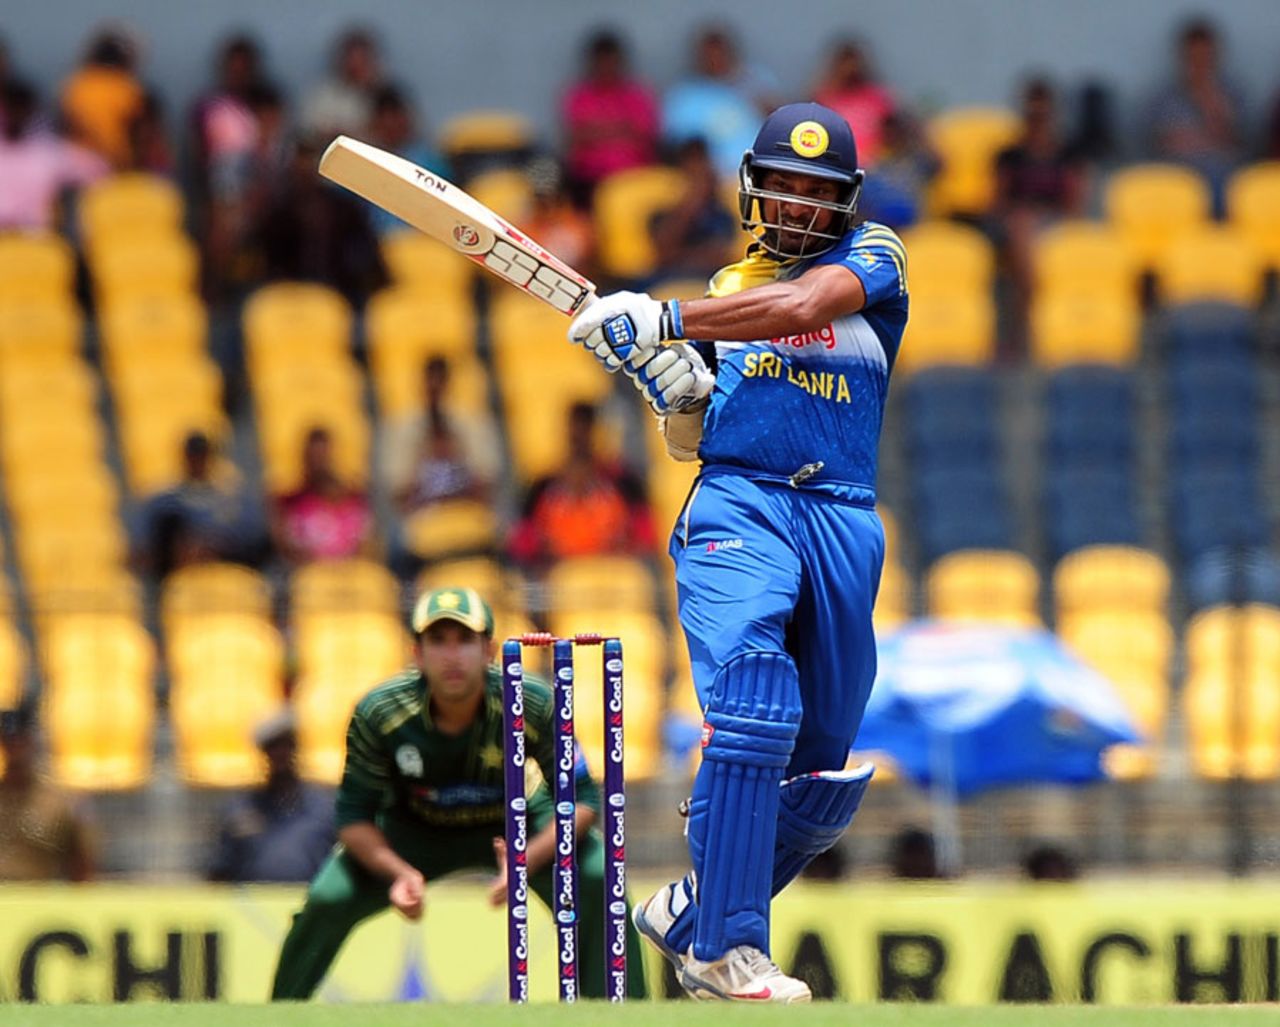 Kumar Sangakkara pulls, Sri Lanka v Pakistan, 1st ODI, Hambantota, August 23, 2014